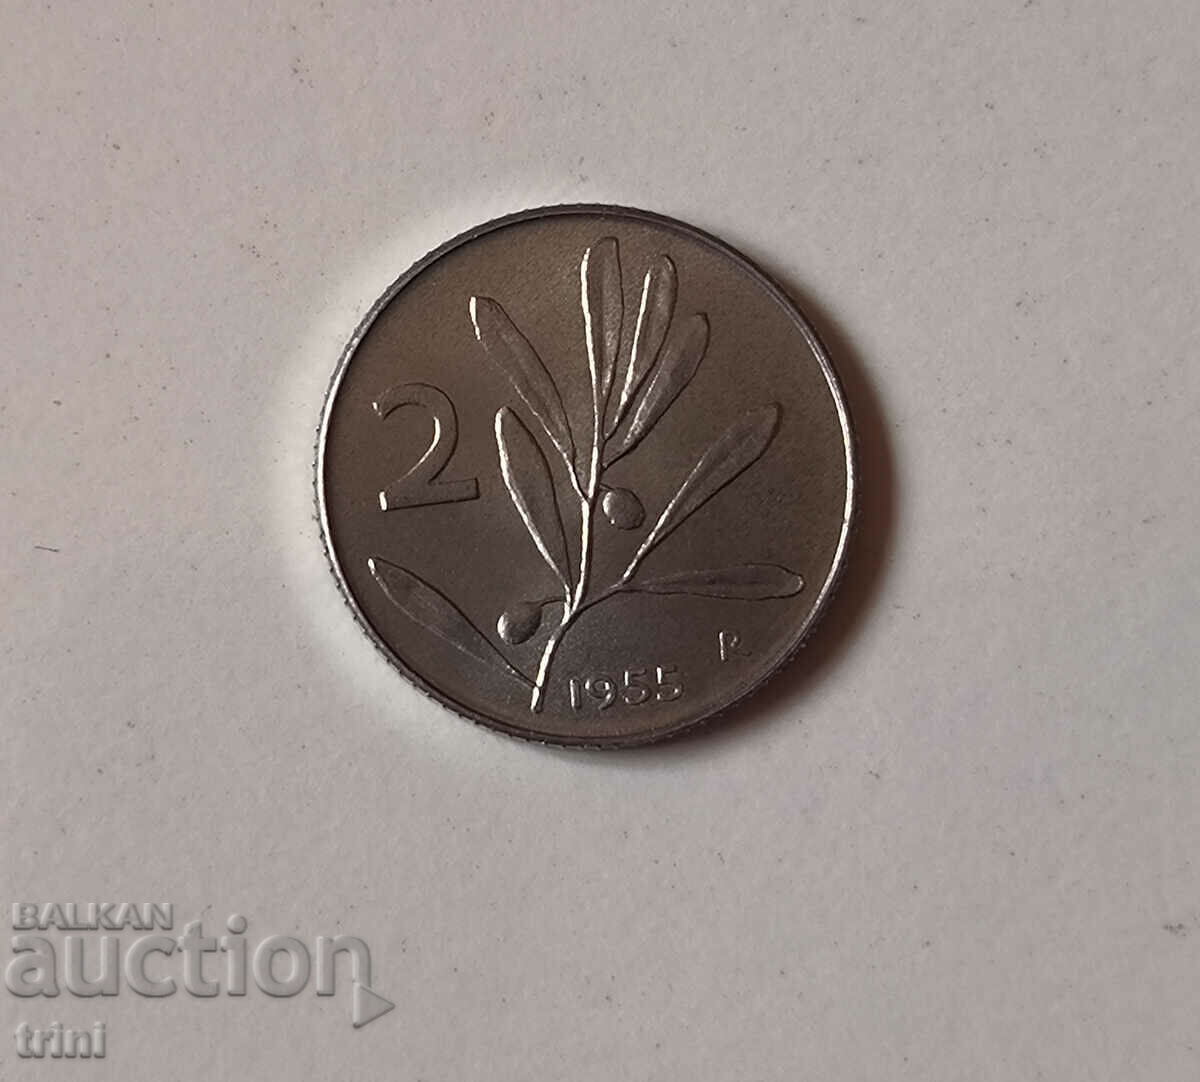 Italy 2 lira 1955 year g103